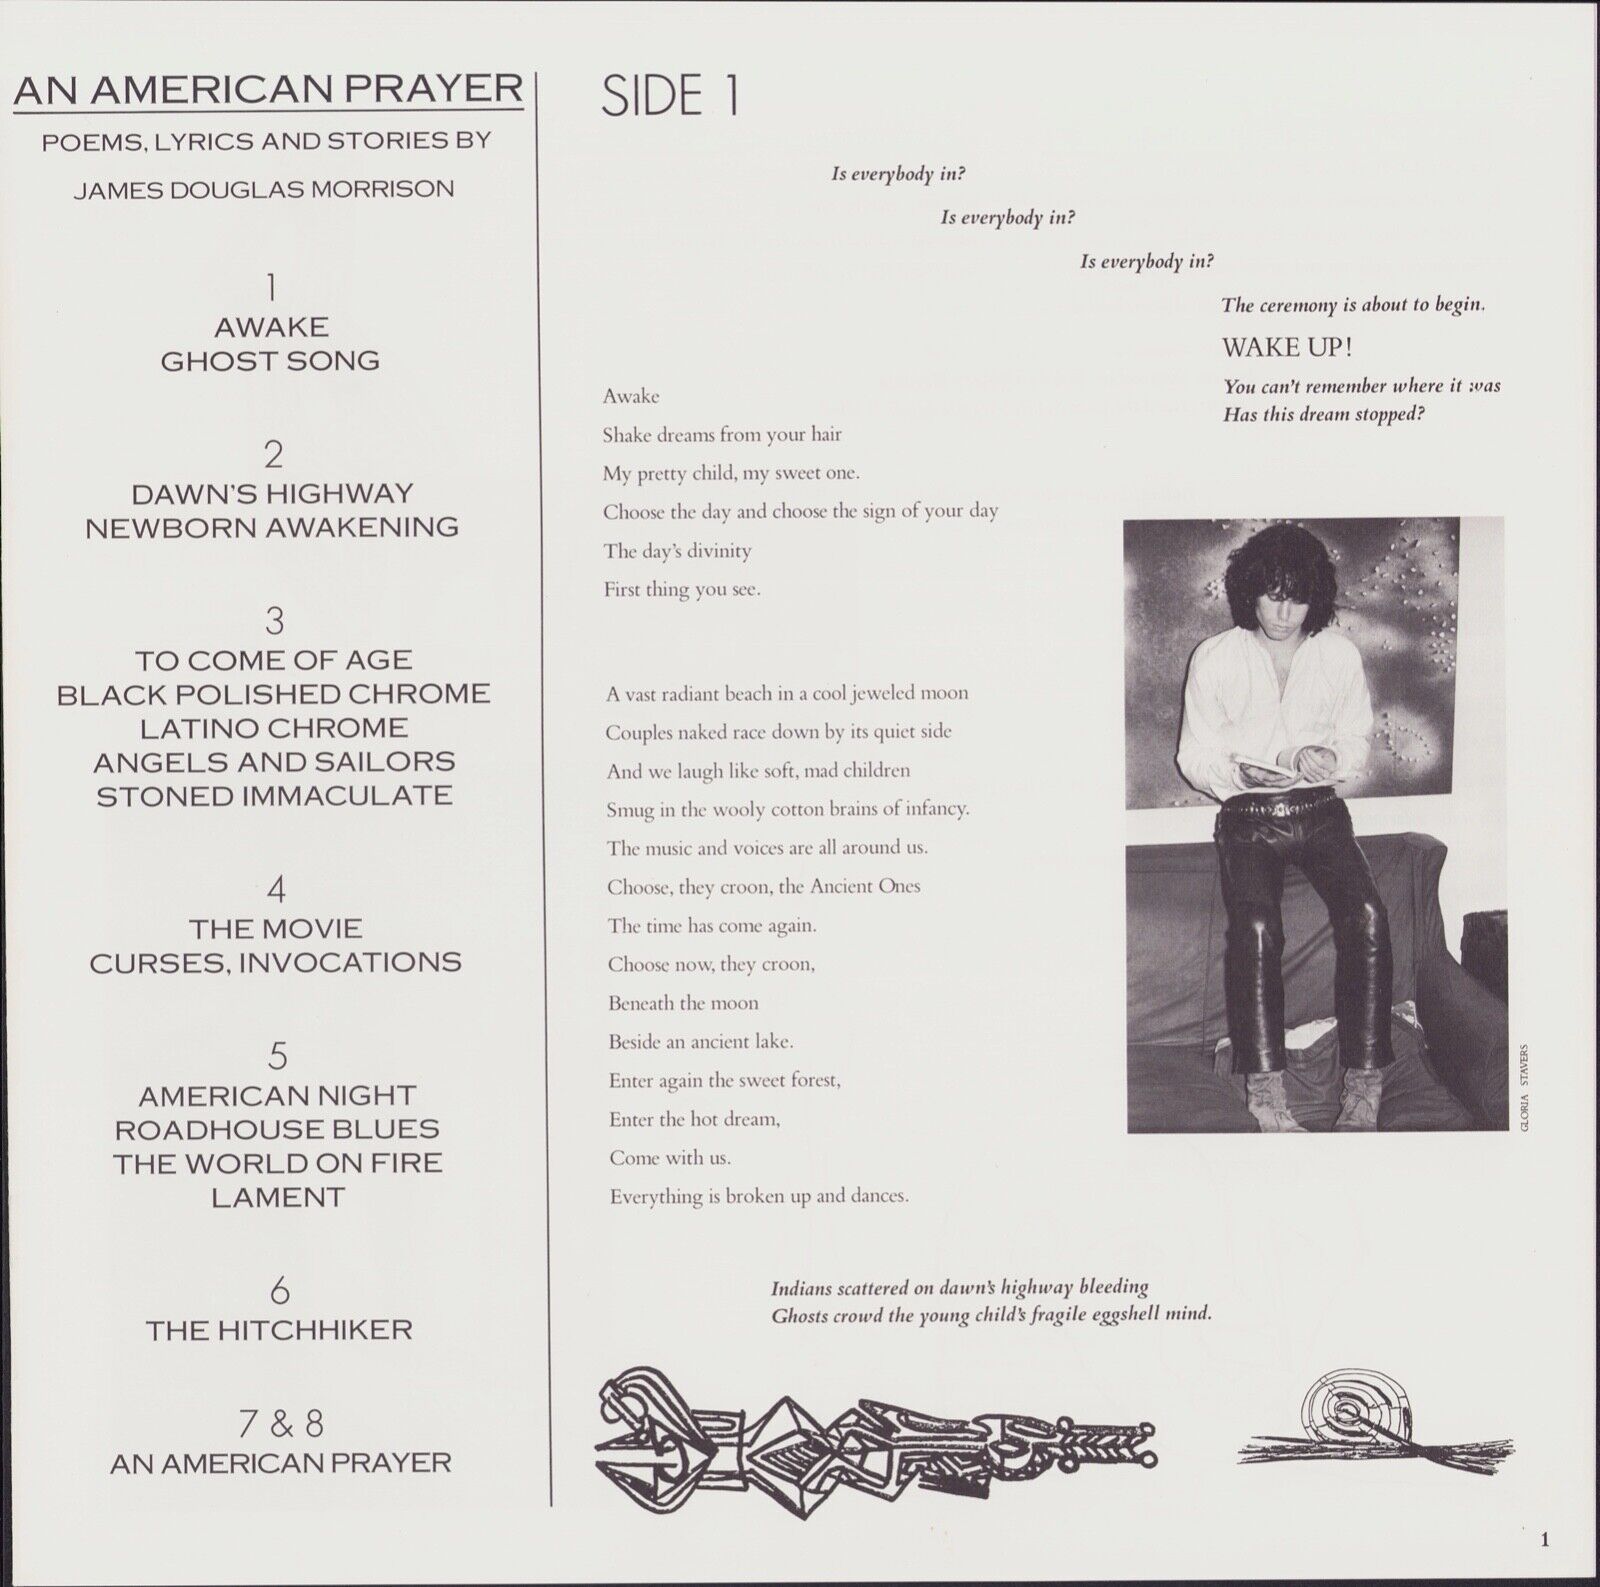 Jim Morrison Music By The Doors ‎- An American Prayer Vinyl LP